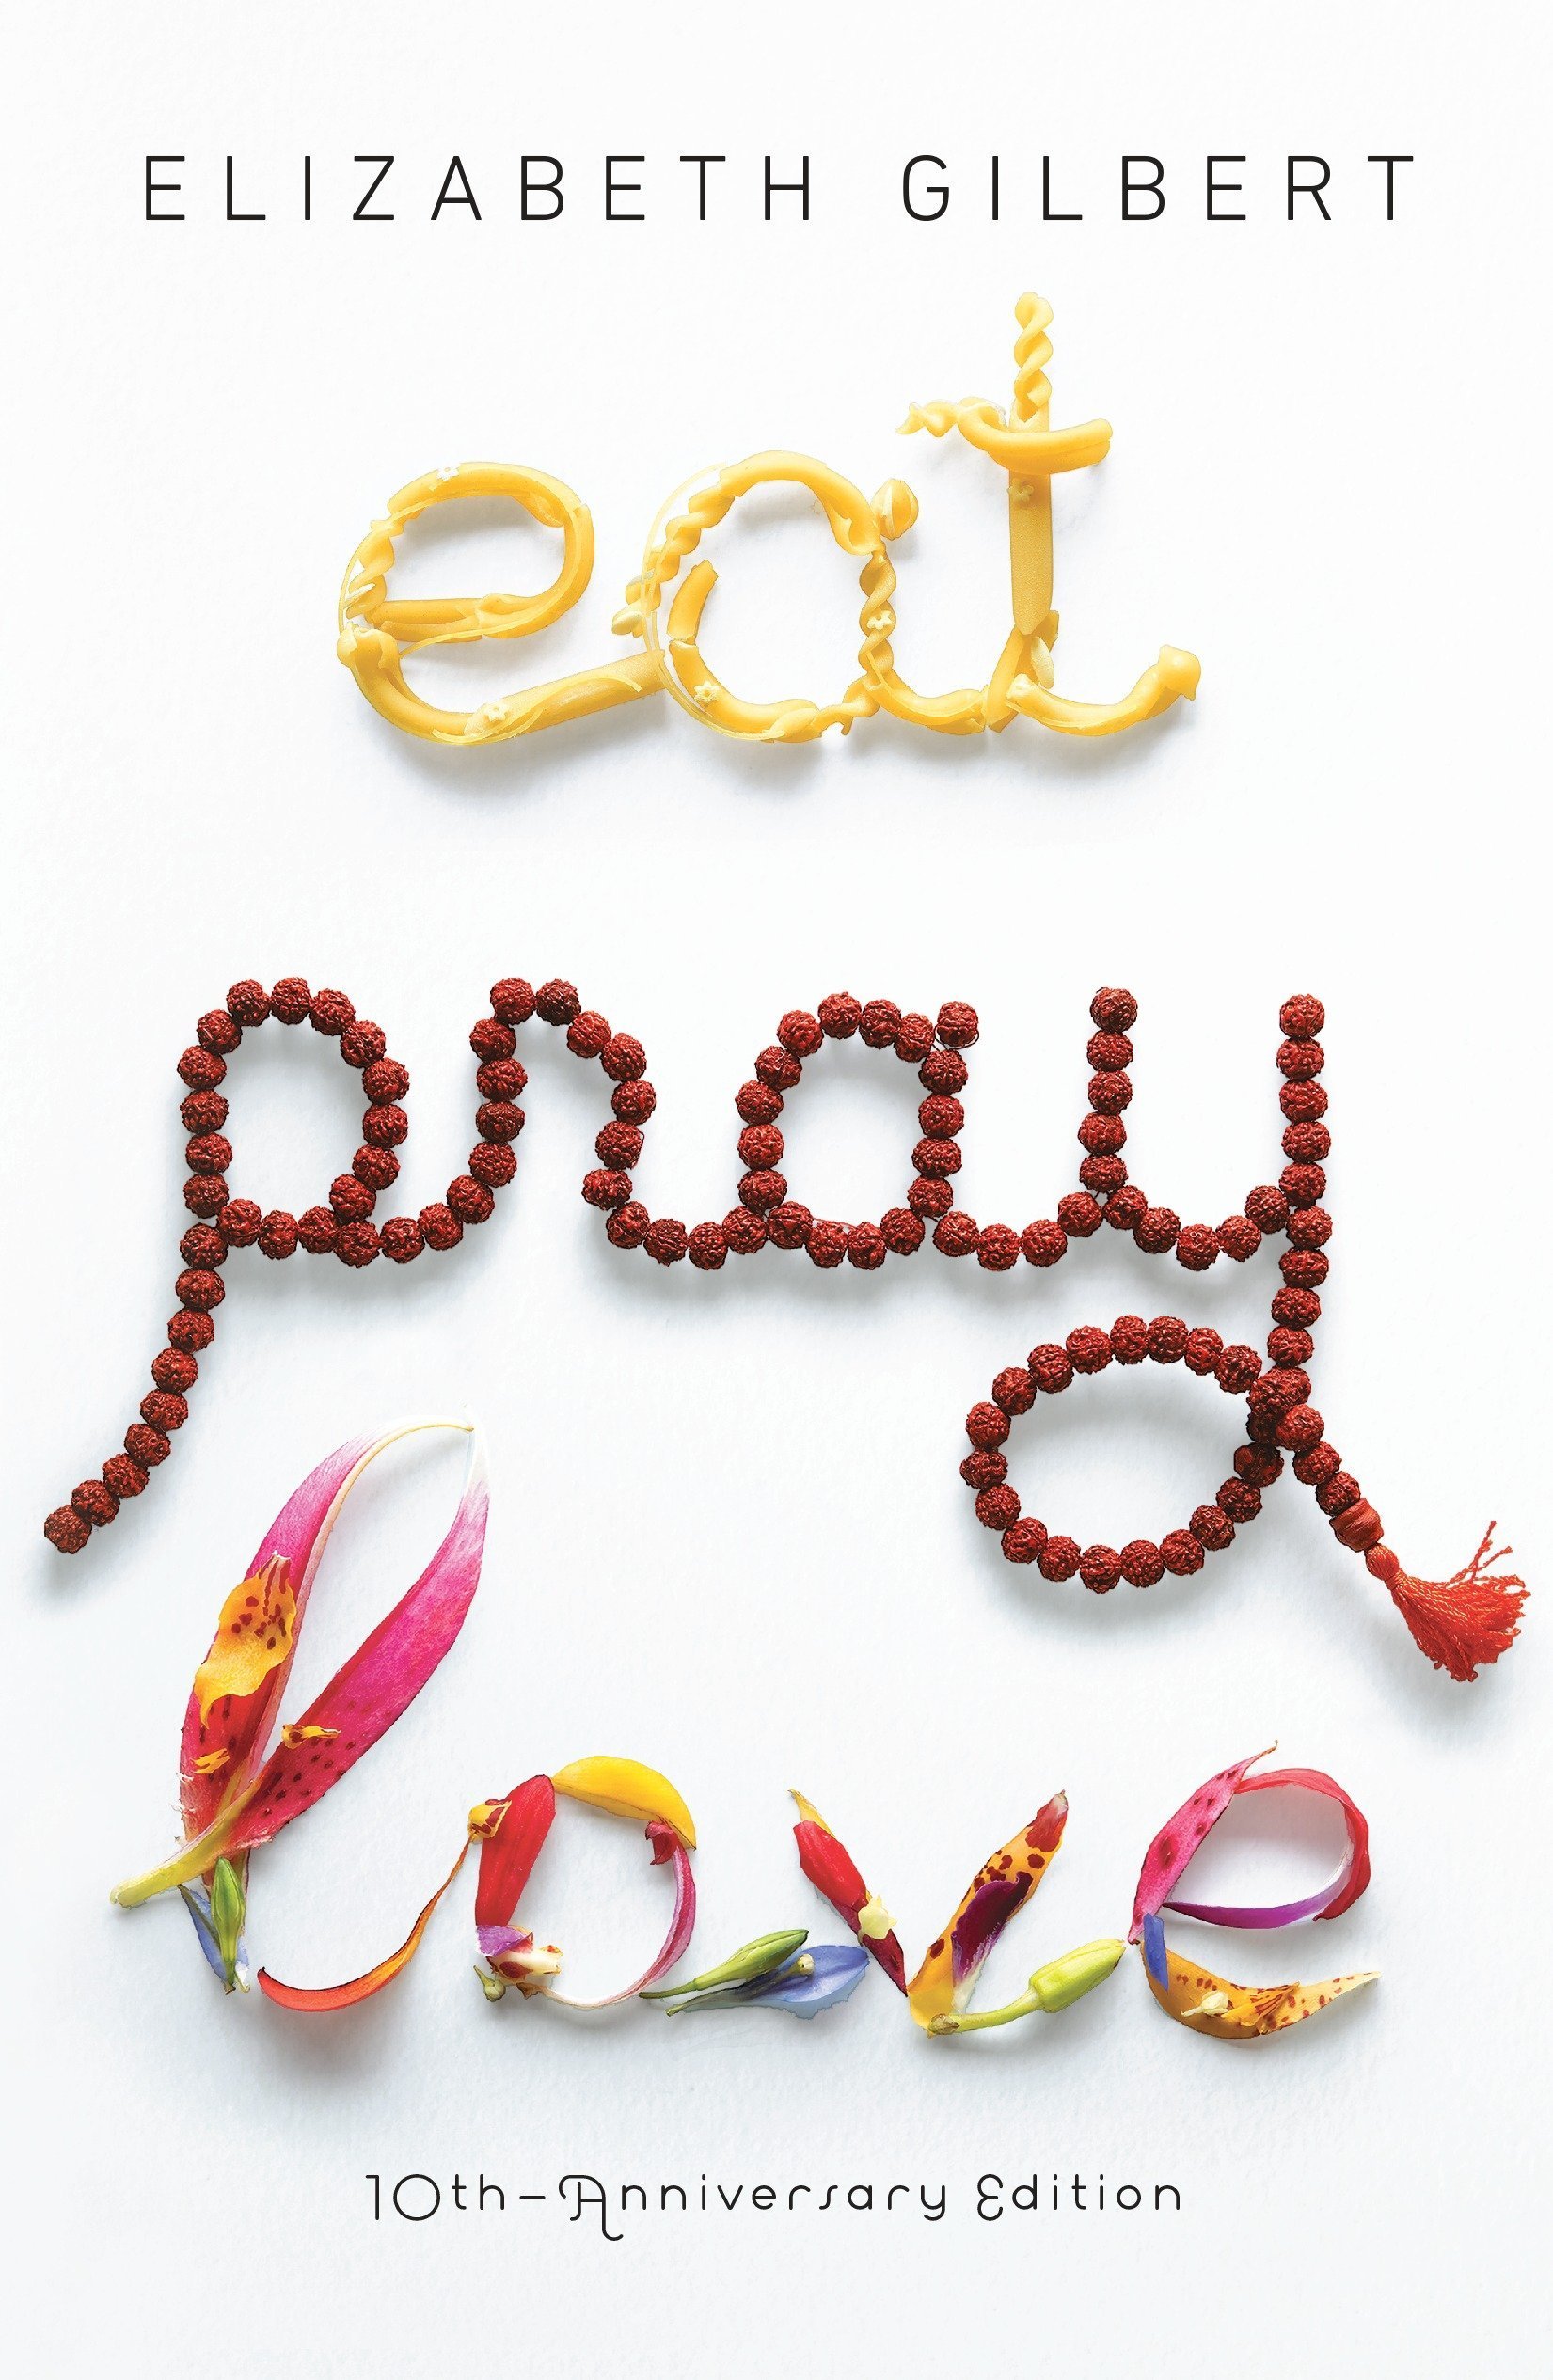 eat pray love by elizabeth gilbert.jpg